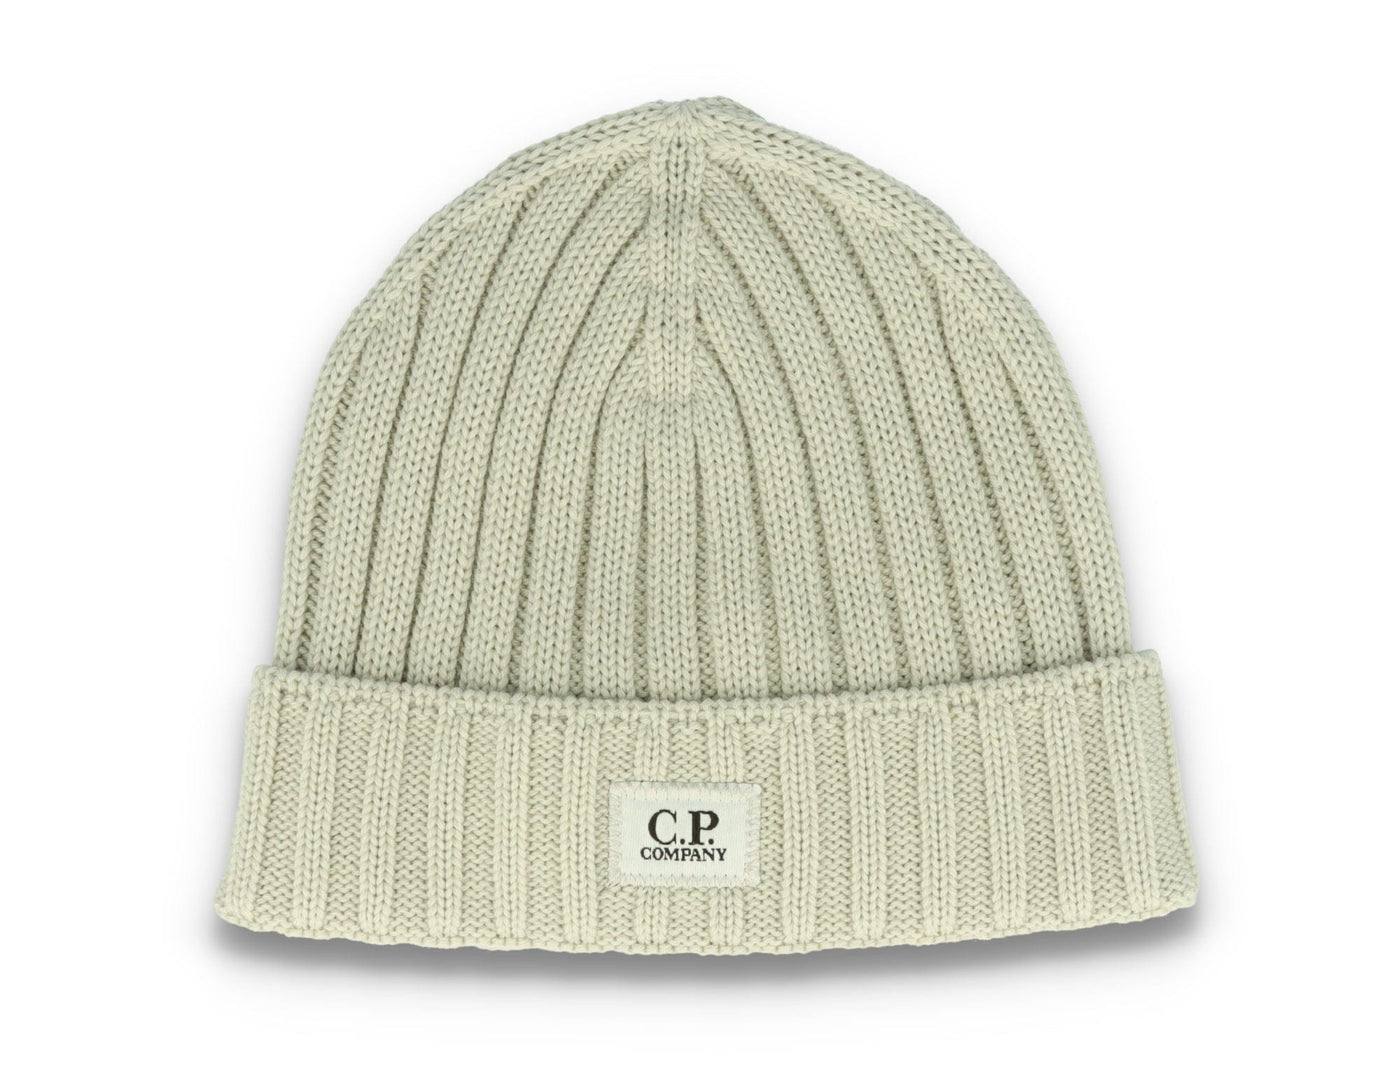 C.P. Company Logo Beanie - Light Grey Merino Wool